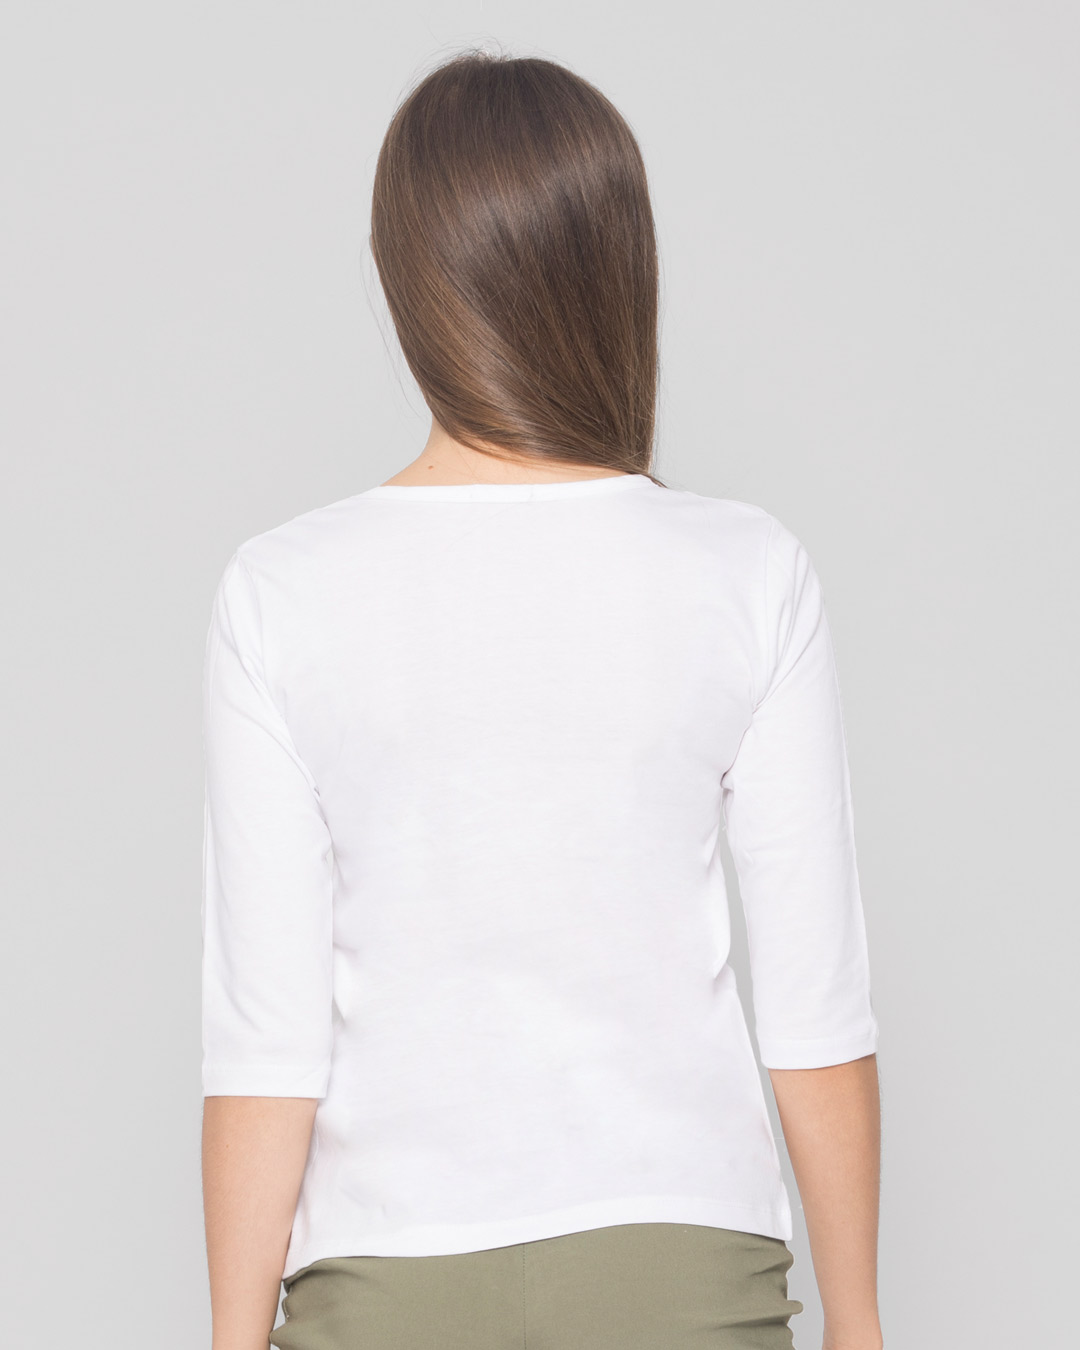 Shop Bugs Bunny moods Round Neck 3/4 Sleeve T-Shirt (LTL) White-Back